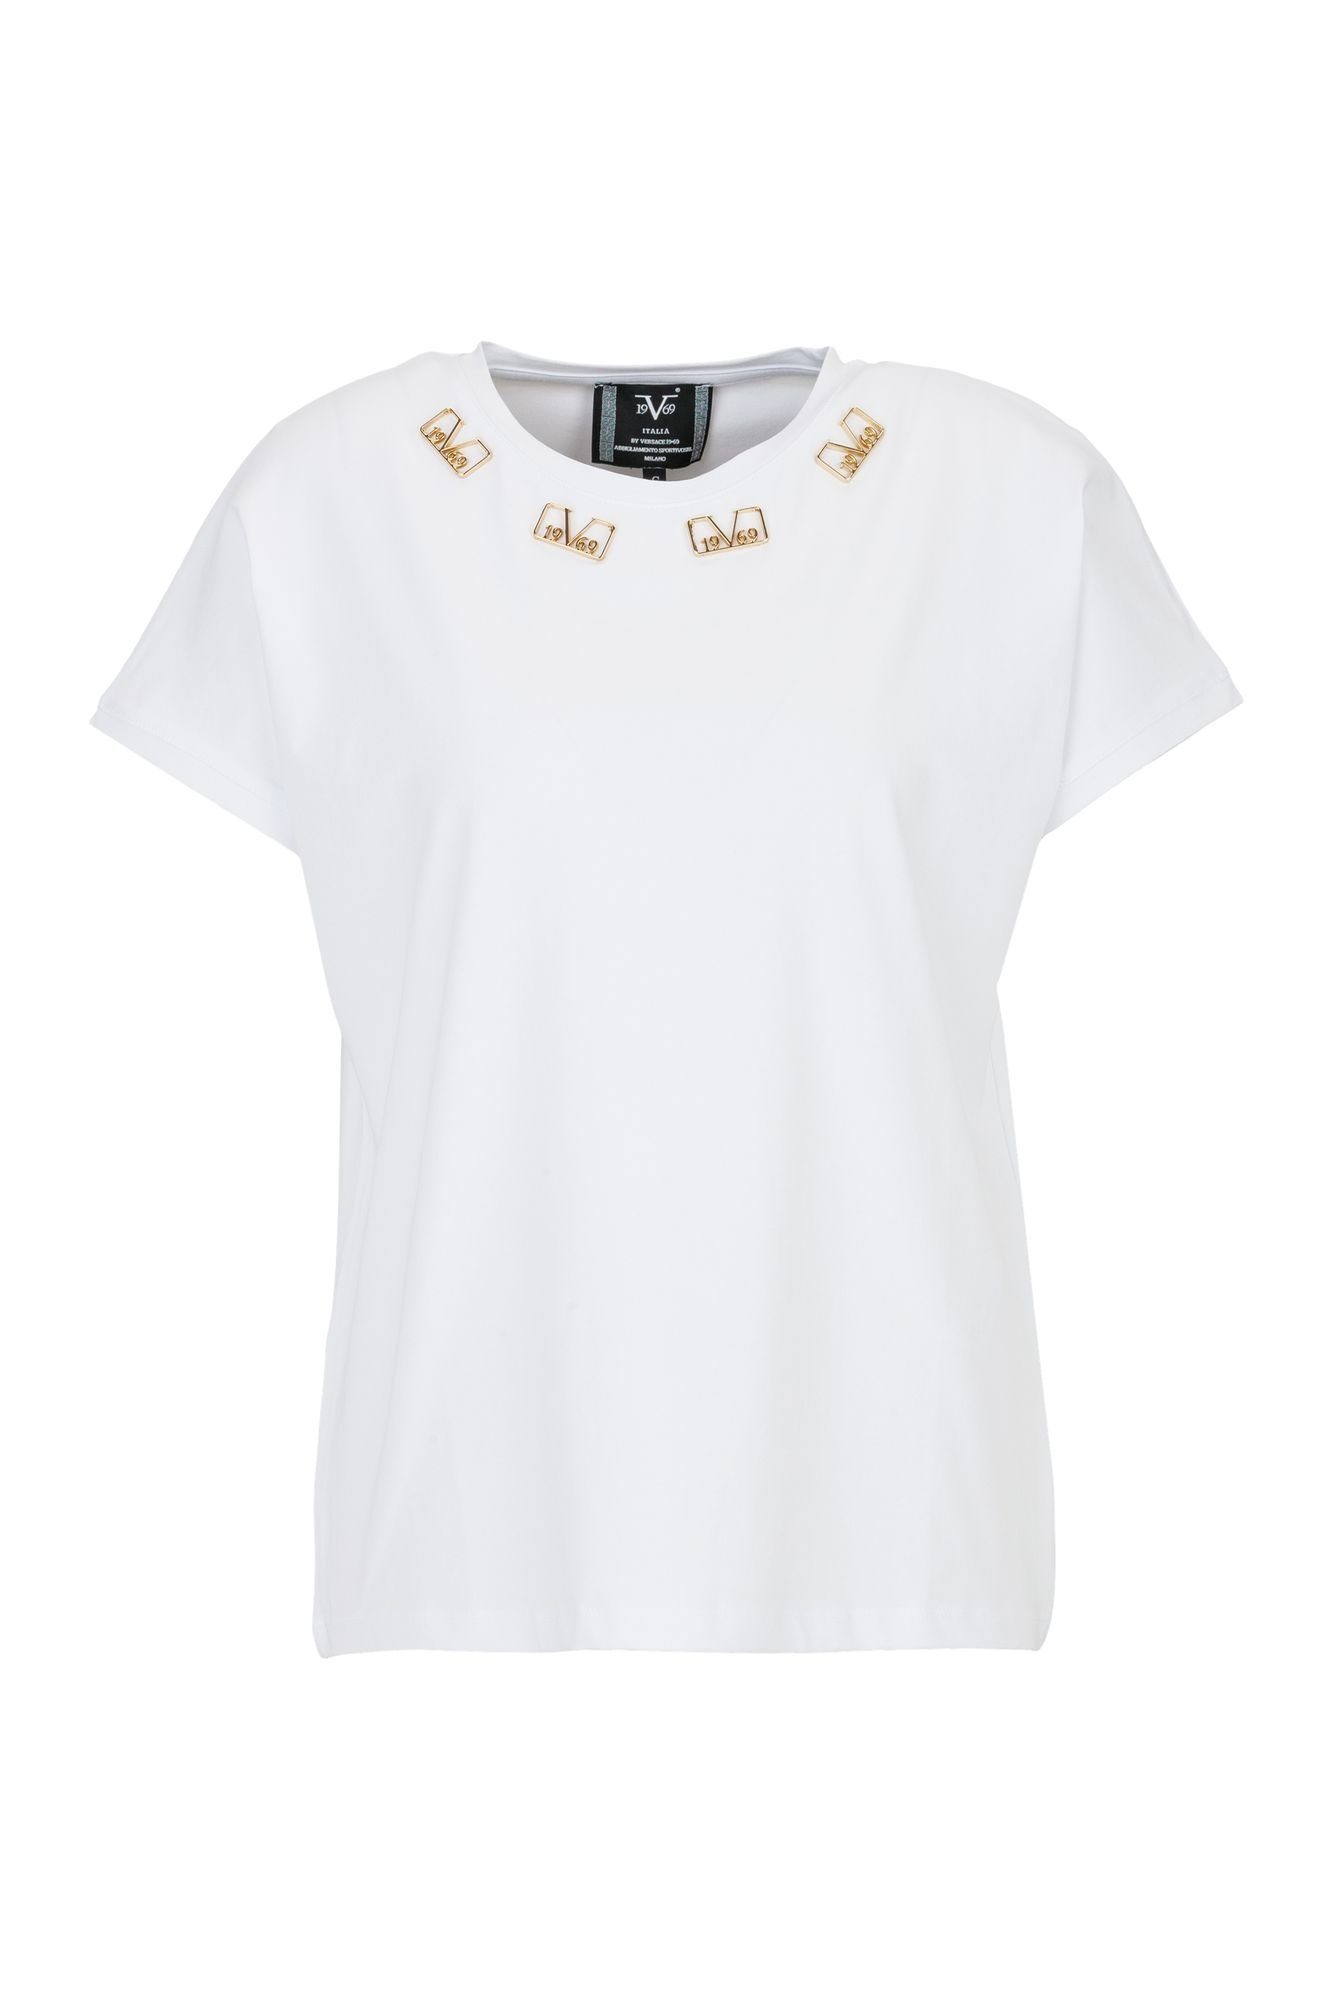 19V69 Italia by T-Shirt Versace WHITE California